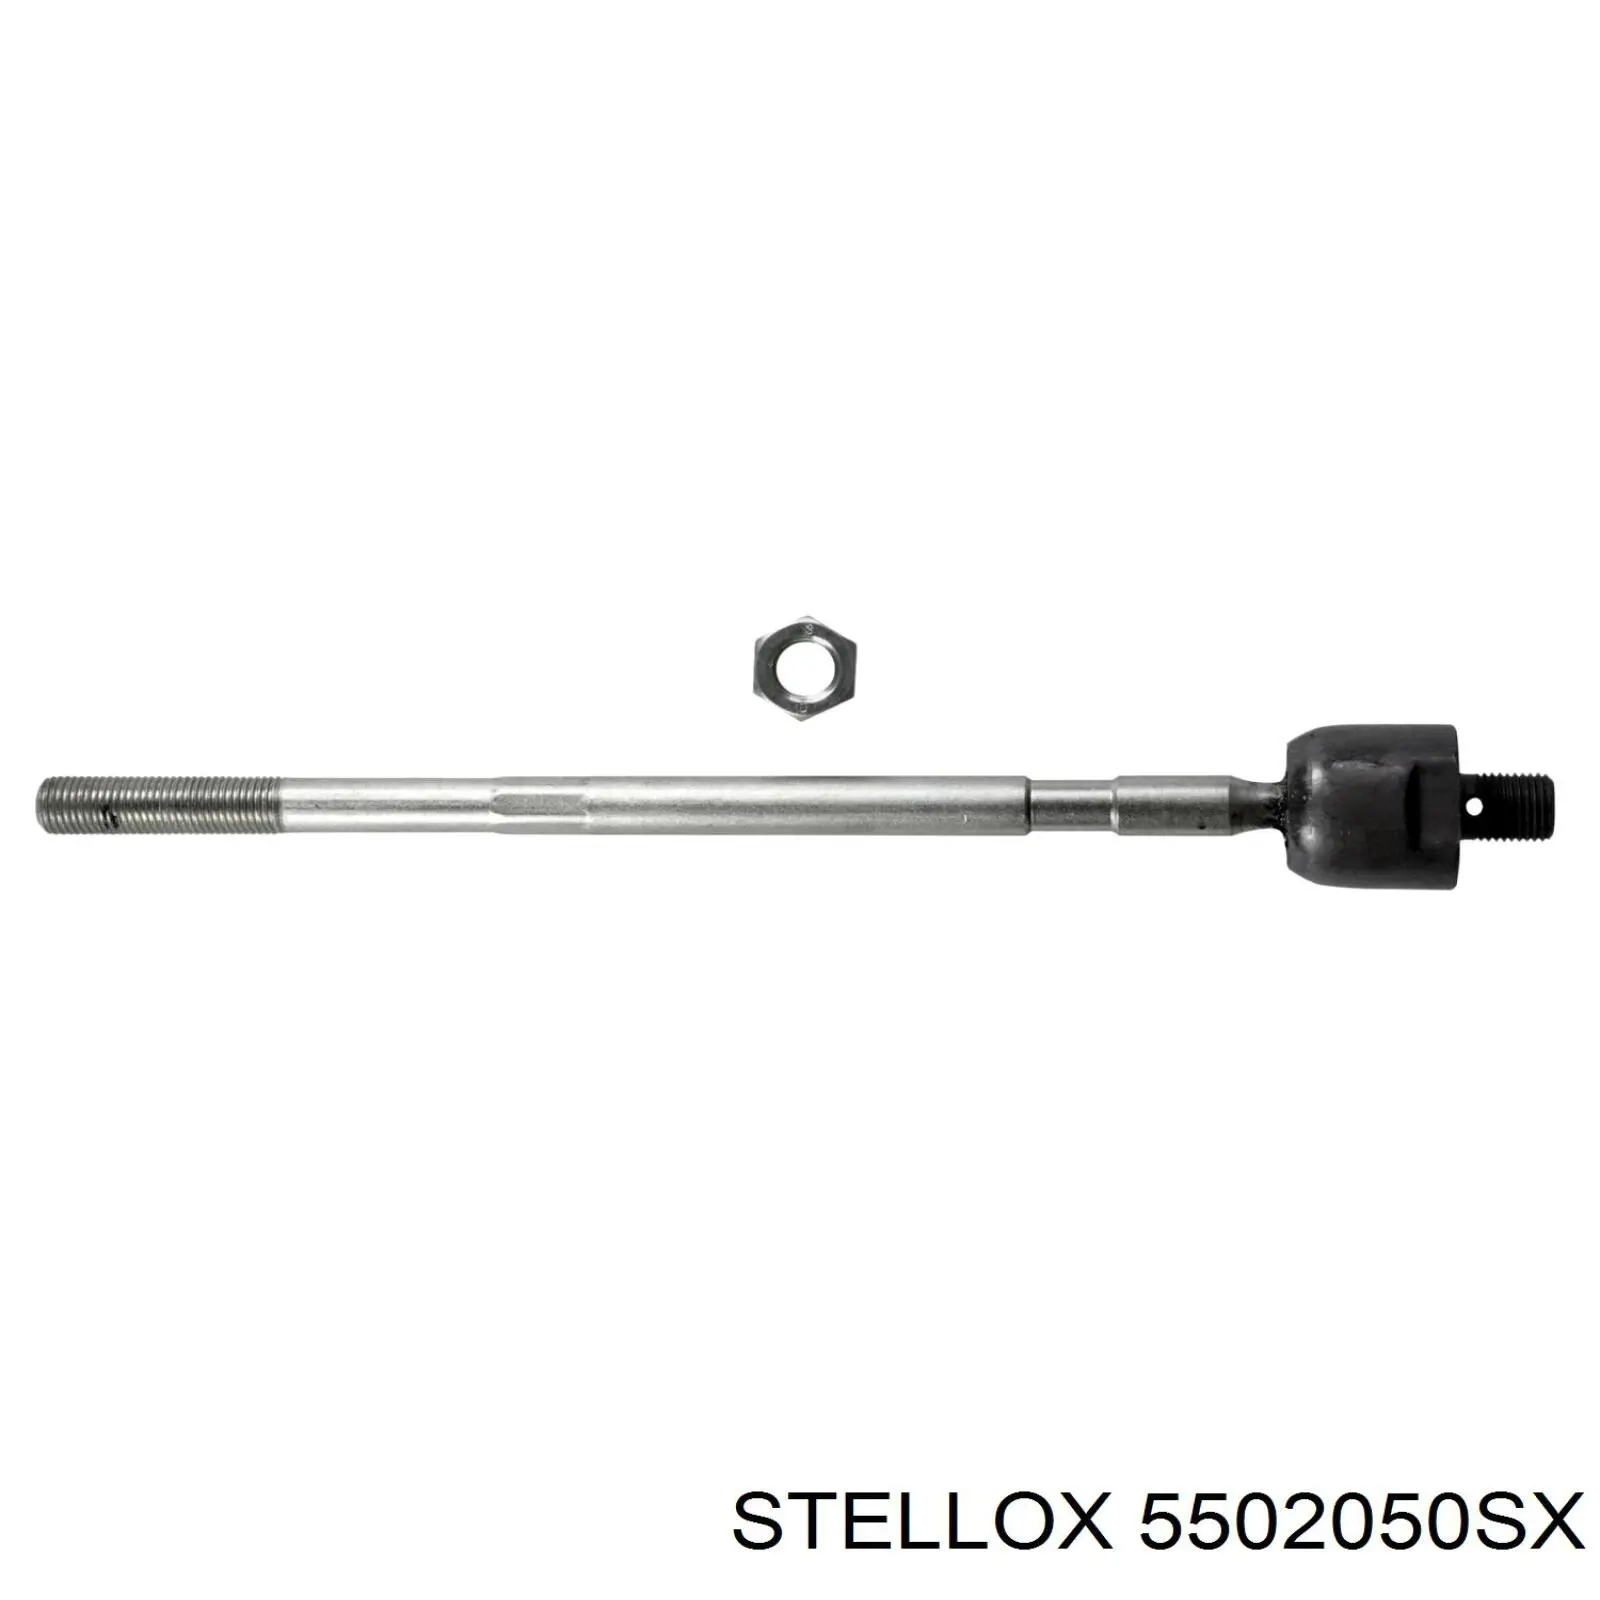 5502050SX Stellox barra de acoplamiento